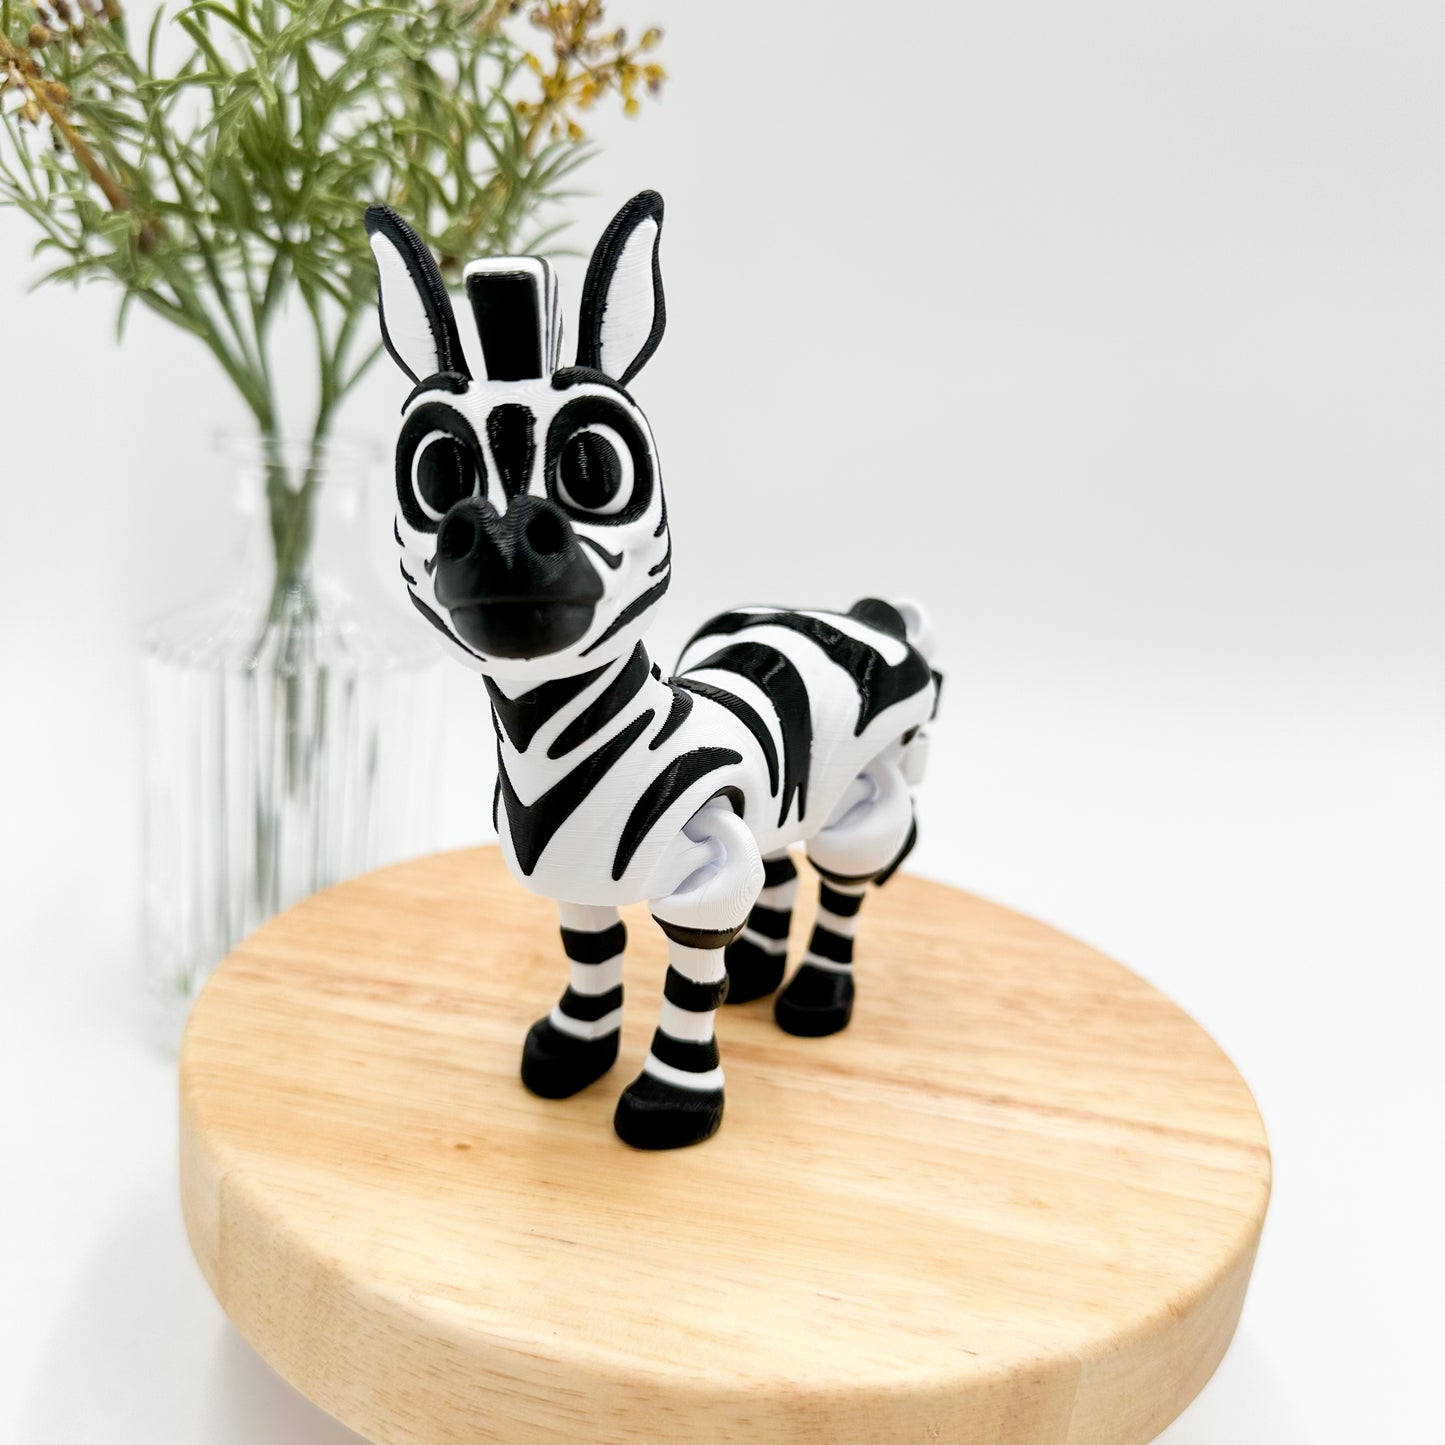 3D Printed Baby Zebra